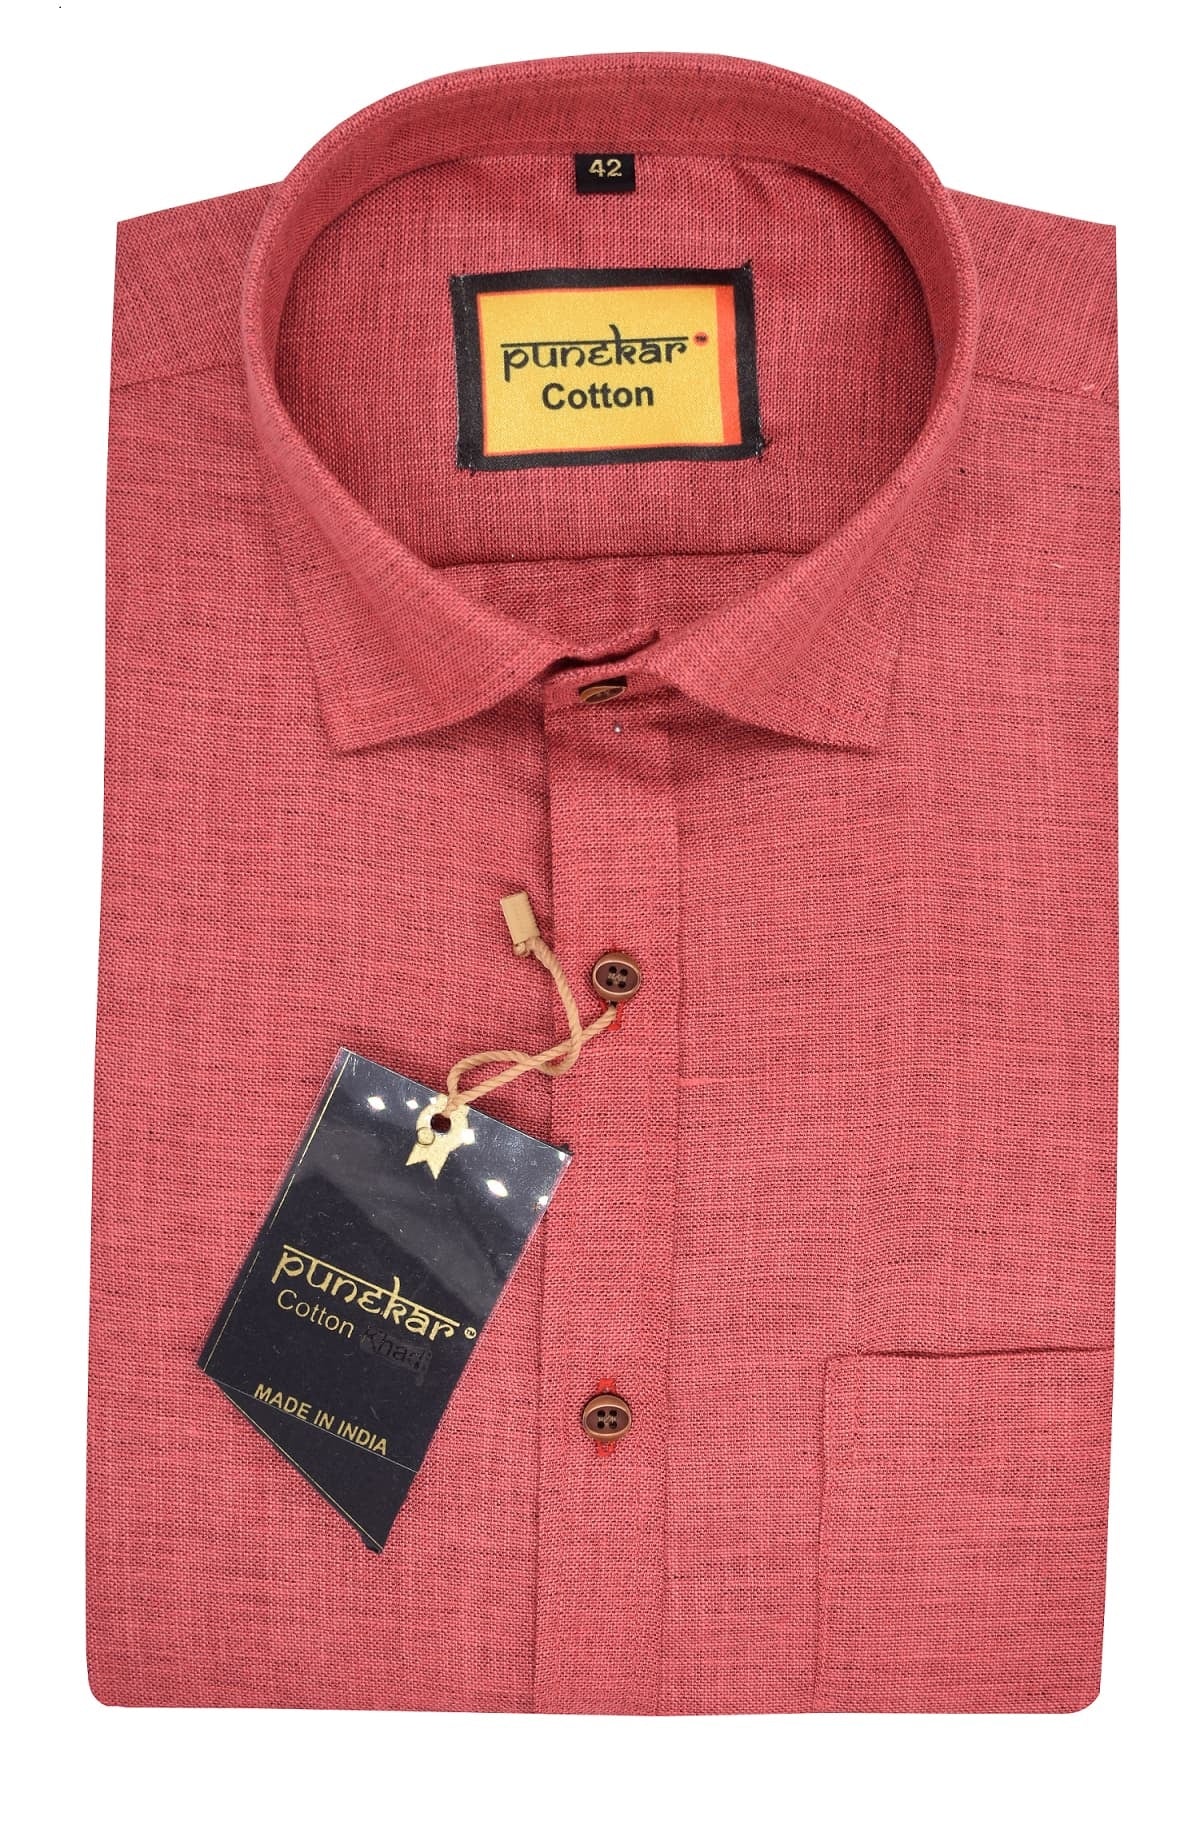 Punekar Cotton Red Color Pure Cotton Handmade Formal Shirt for Men&